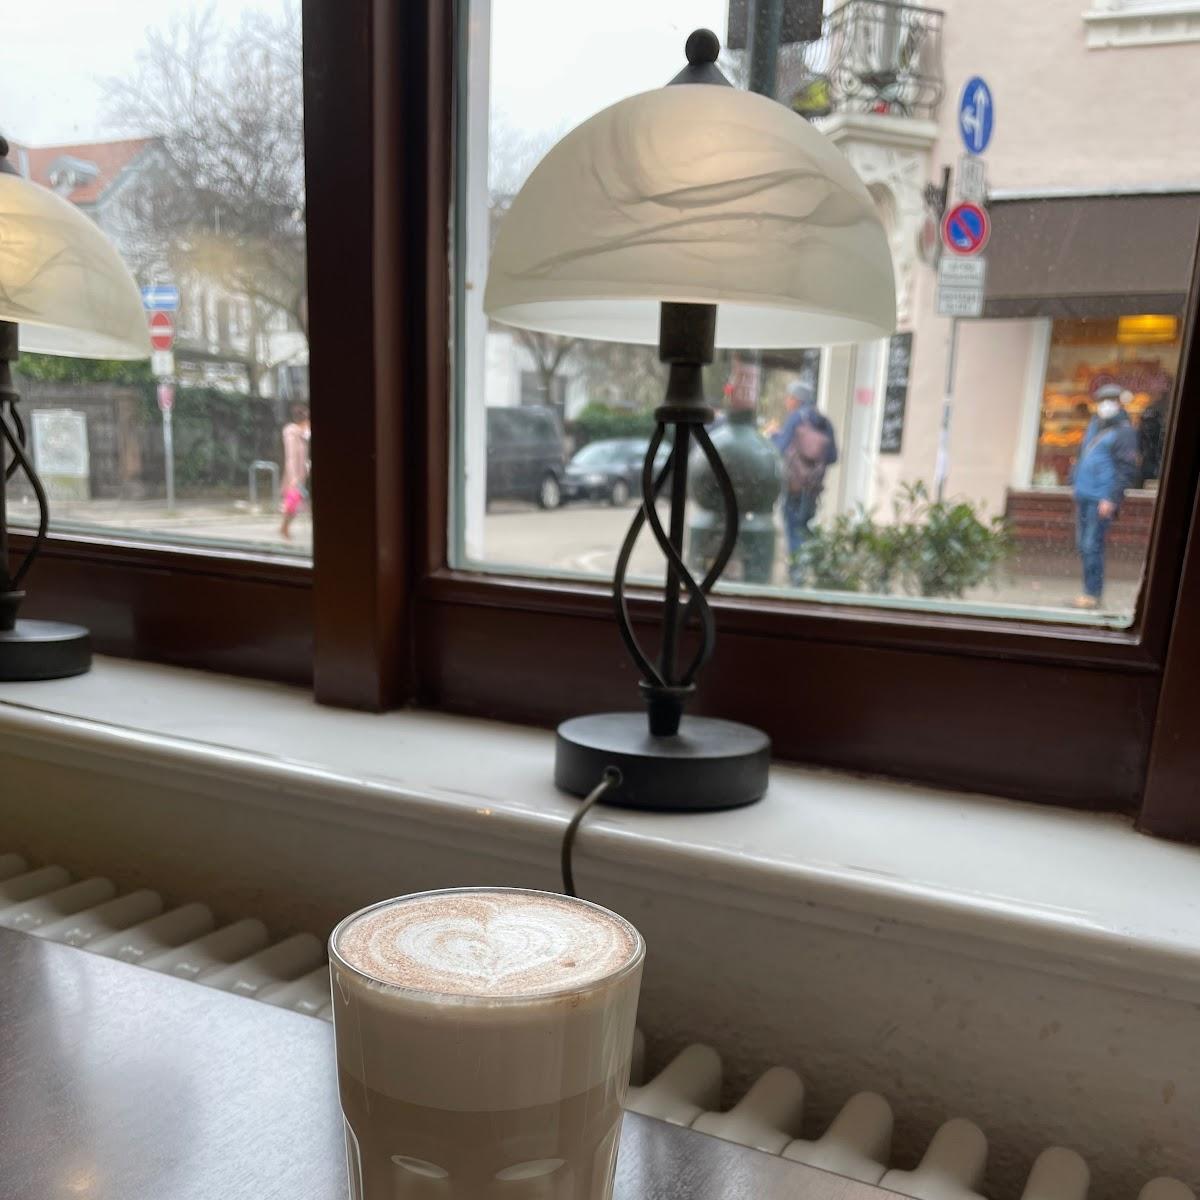 Restaurant "Cafe au lait" in Freiburg im Breisgau